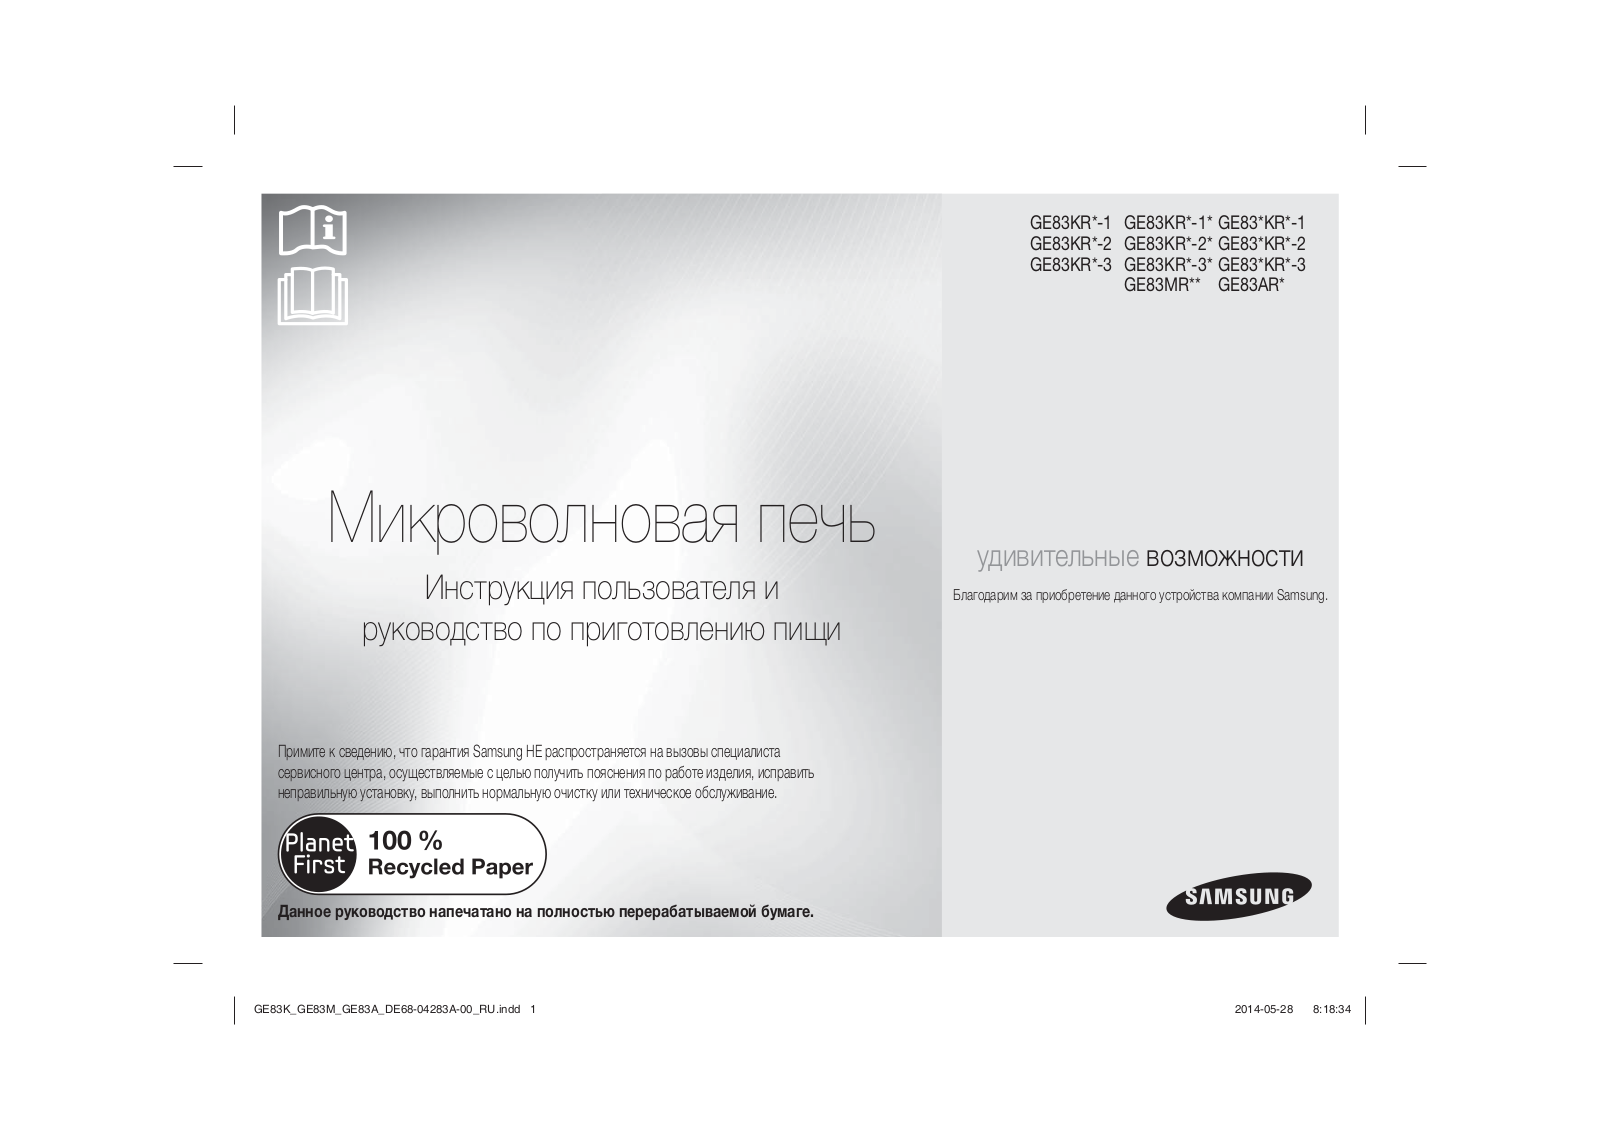 Samsung GE83KRS-1 User Manual